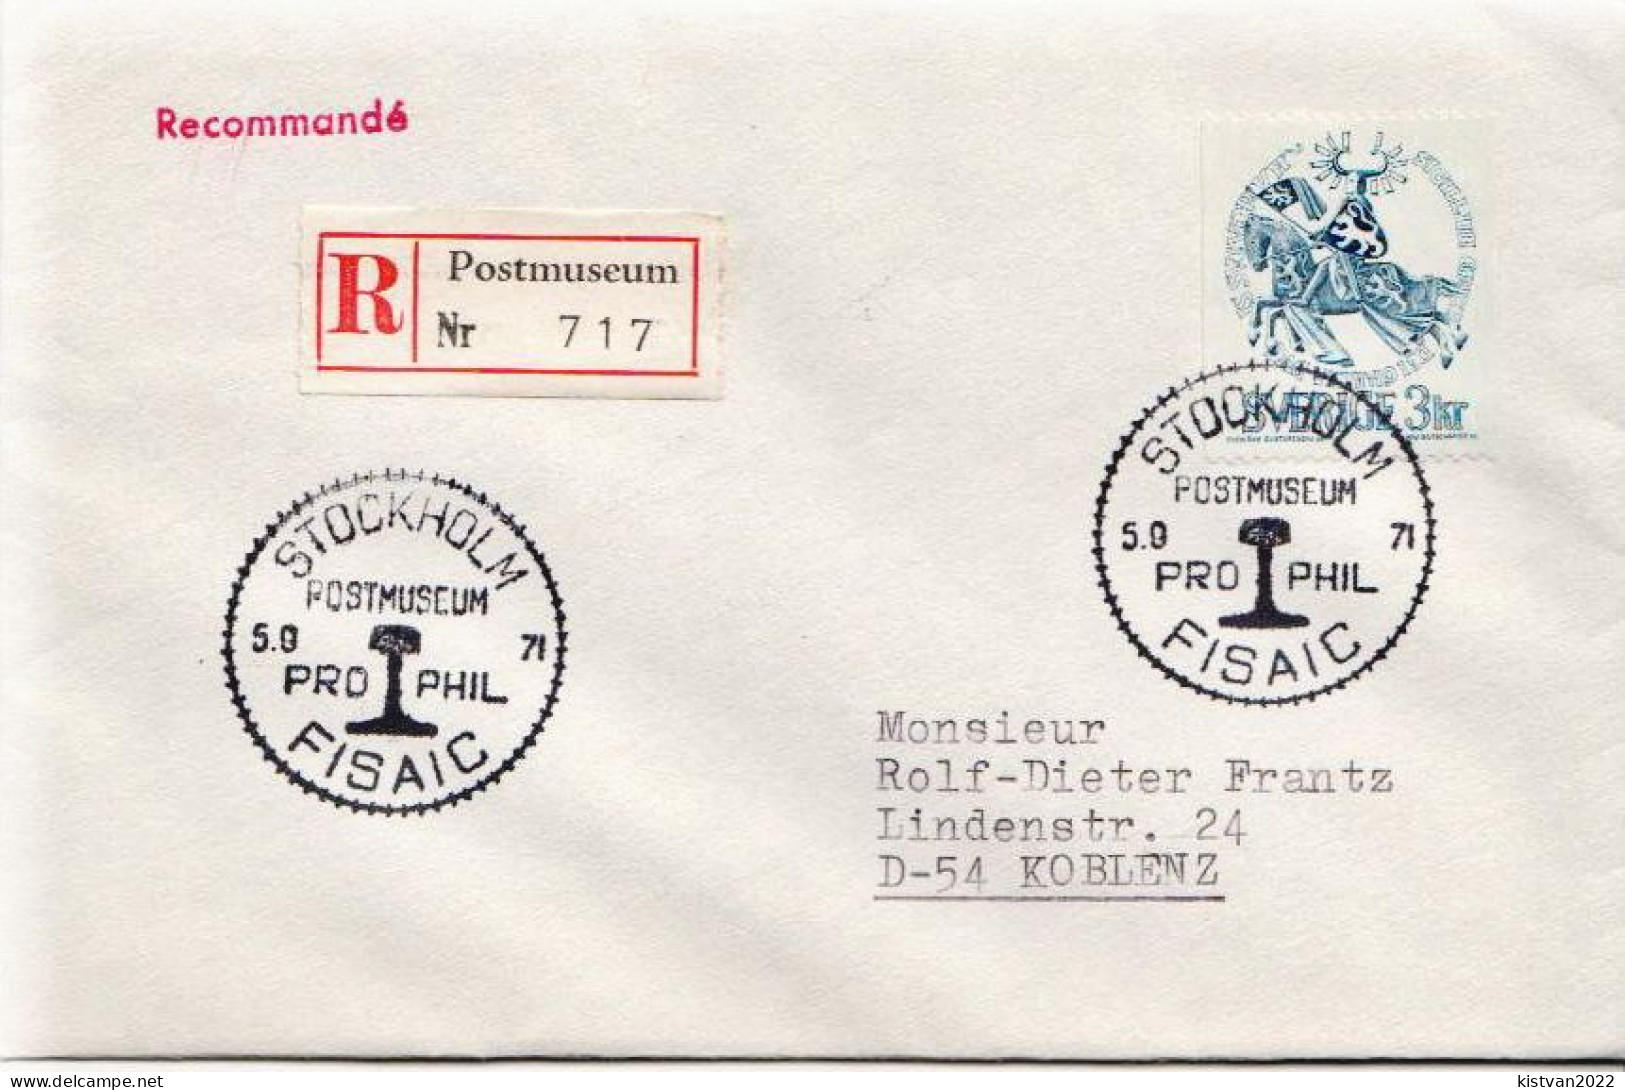 Postal History: Sweden R Cover - Expositions Philatéliques